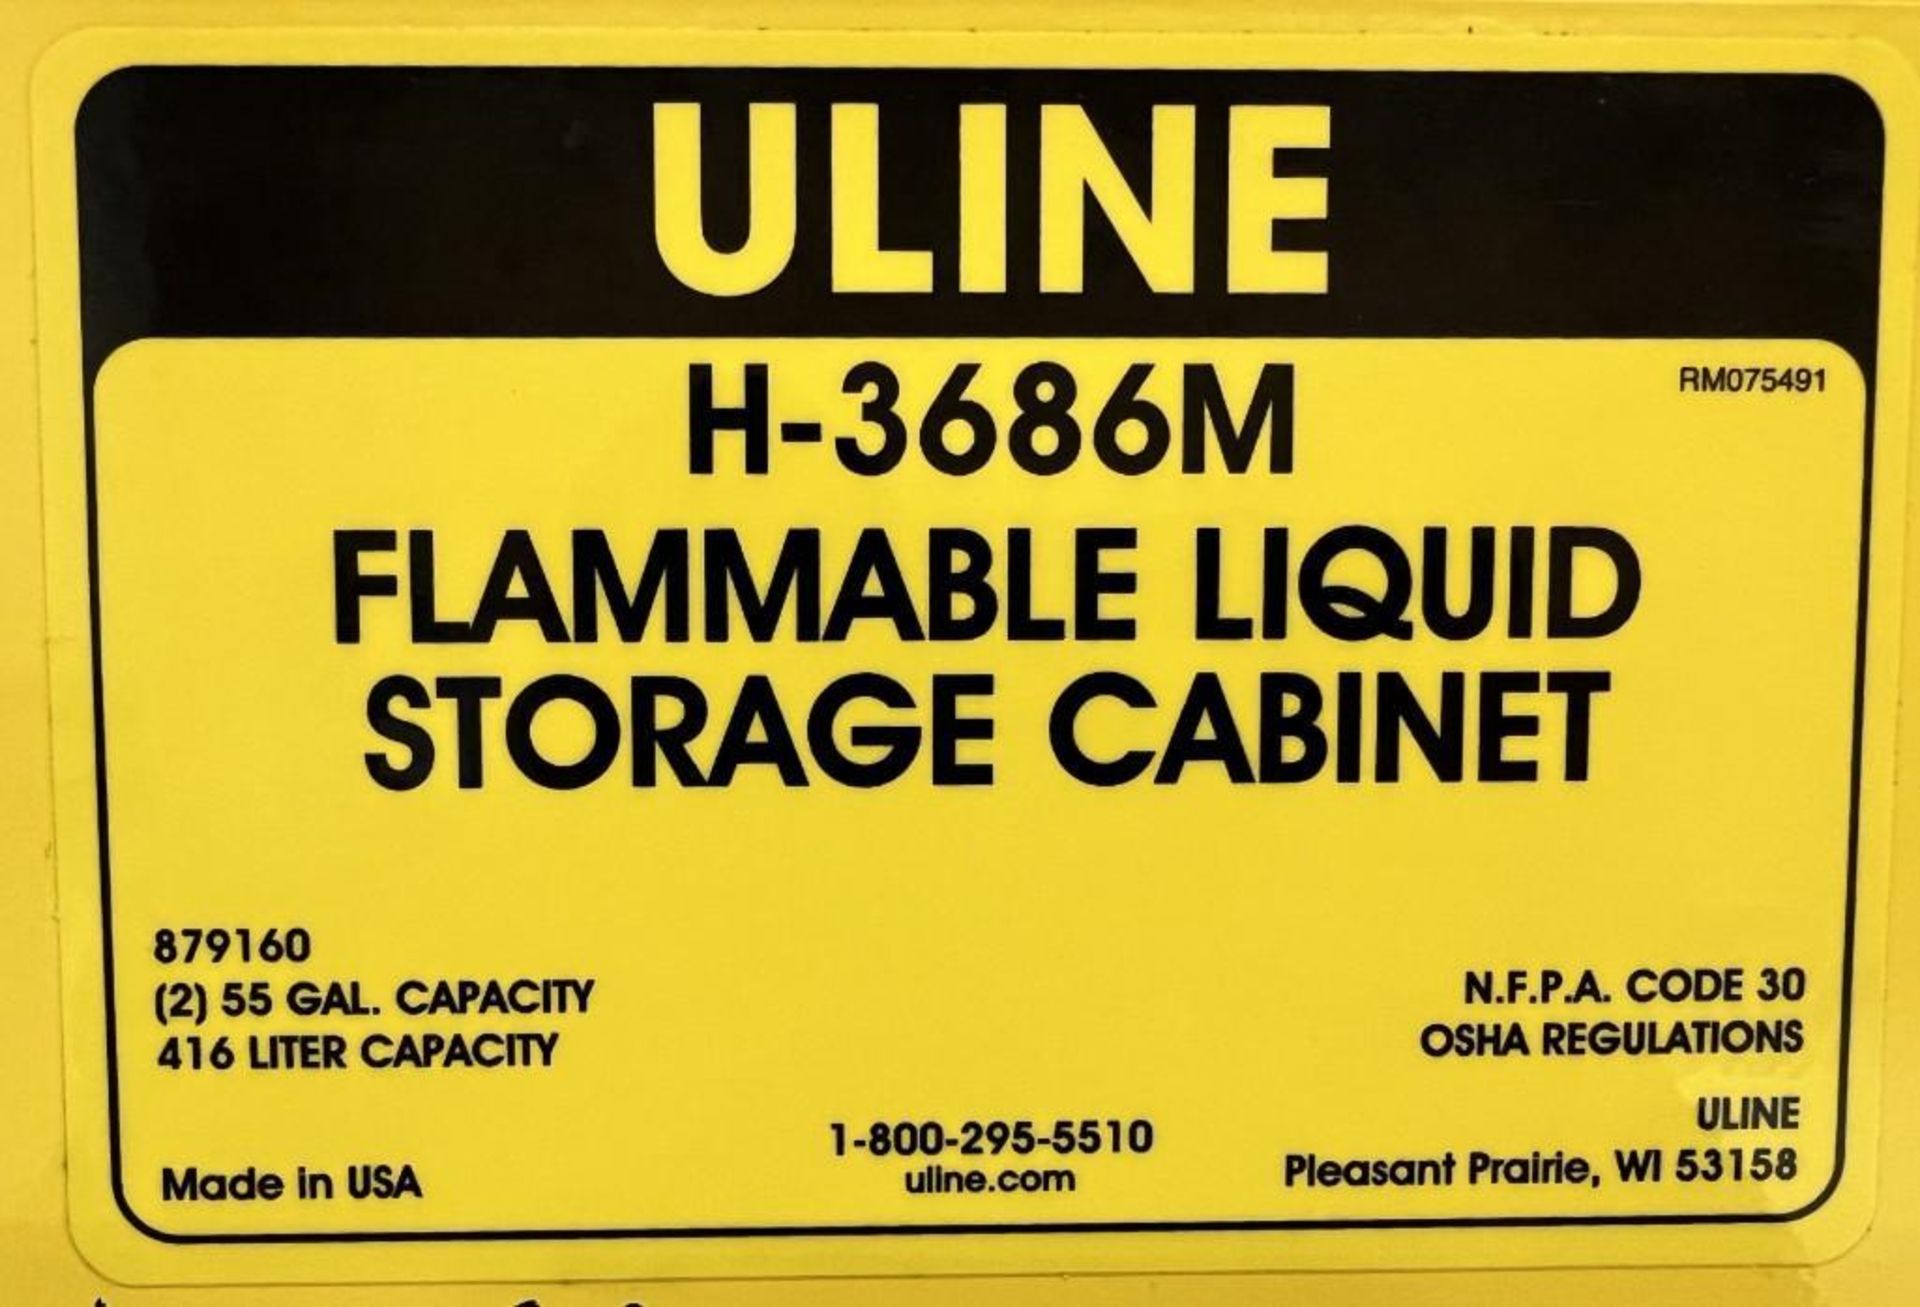 Uline Flammable Drum Storage Cabinet, Model H-3686M. (2) 55 Gallon drum capacity. - Image 6 of 6